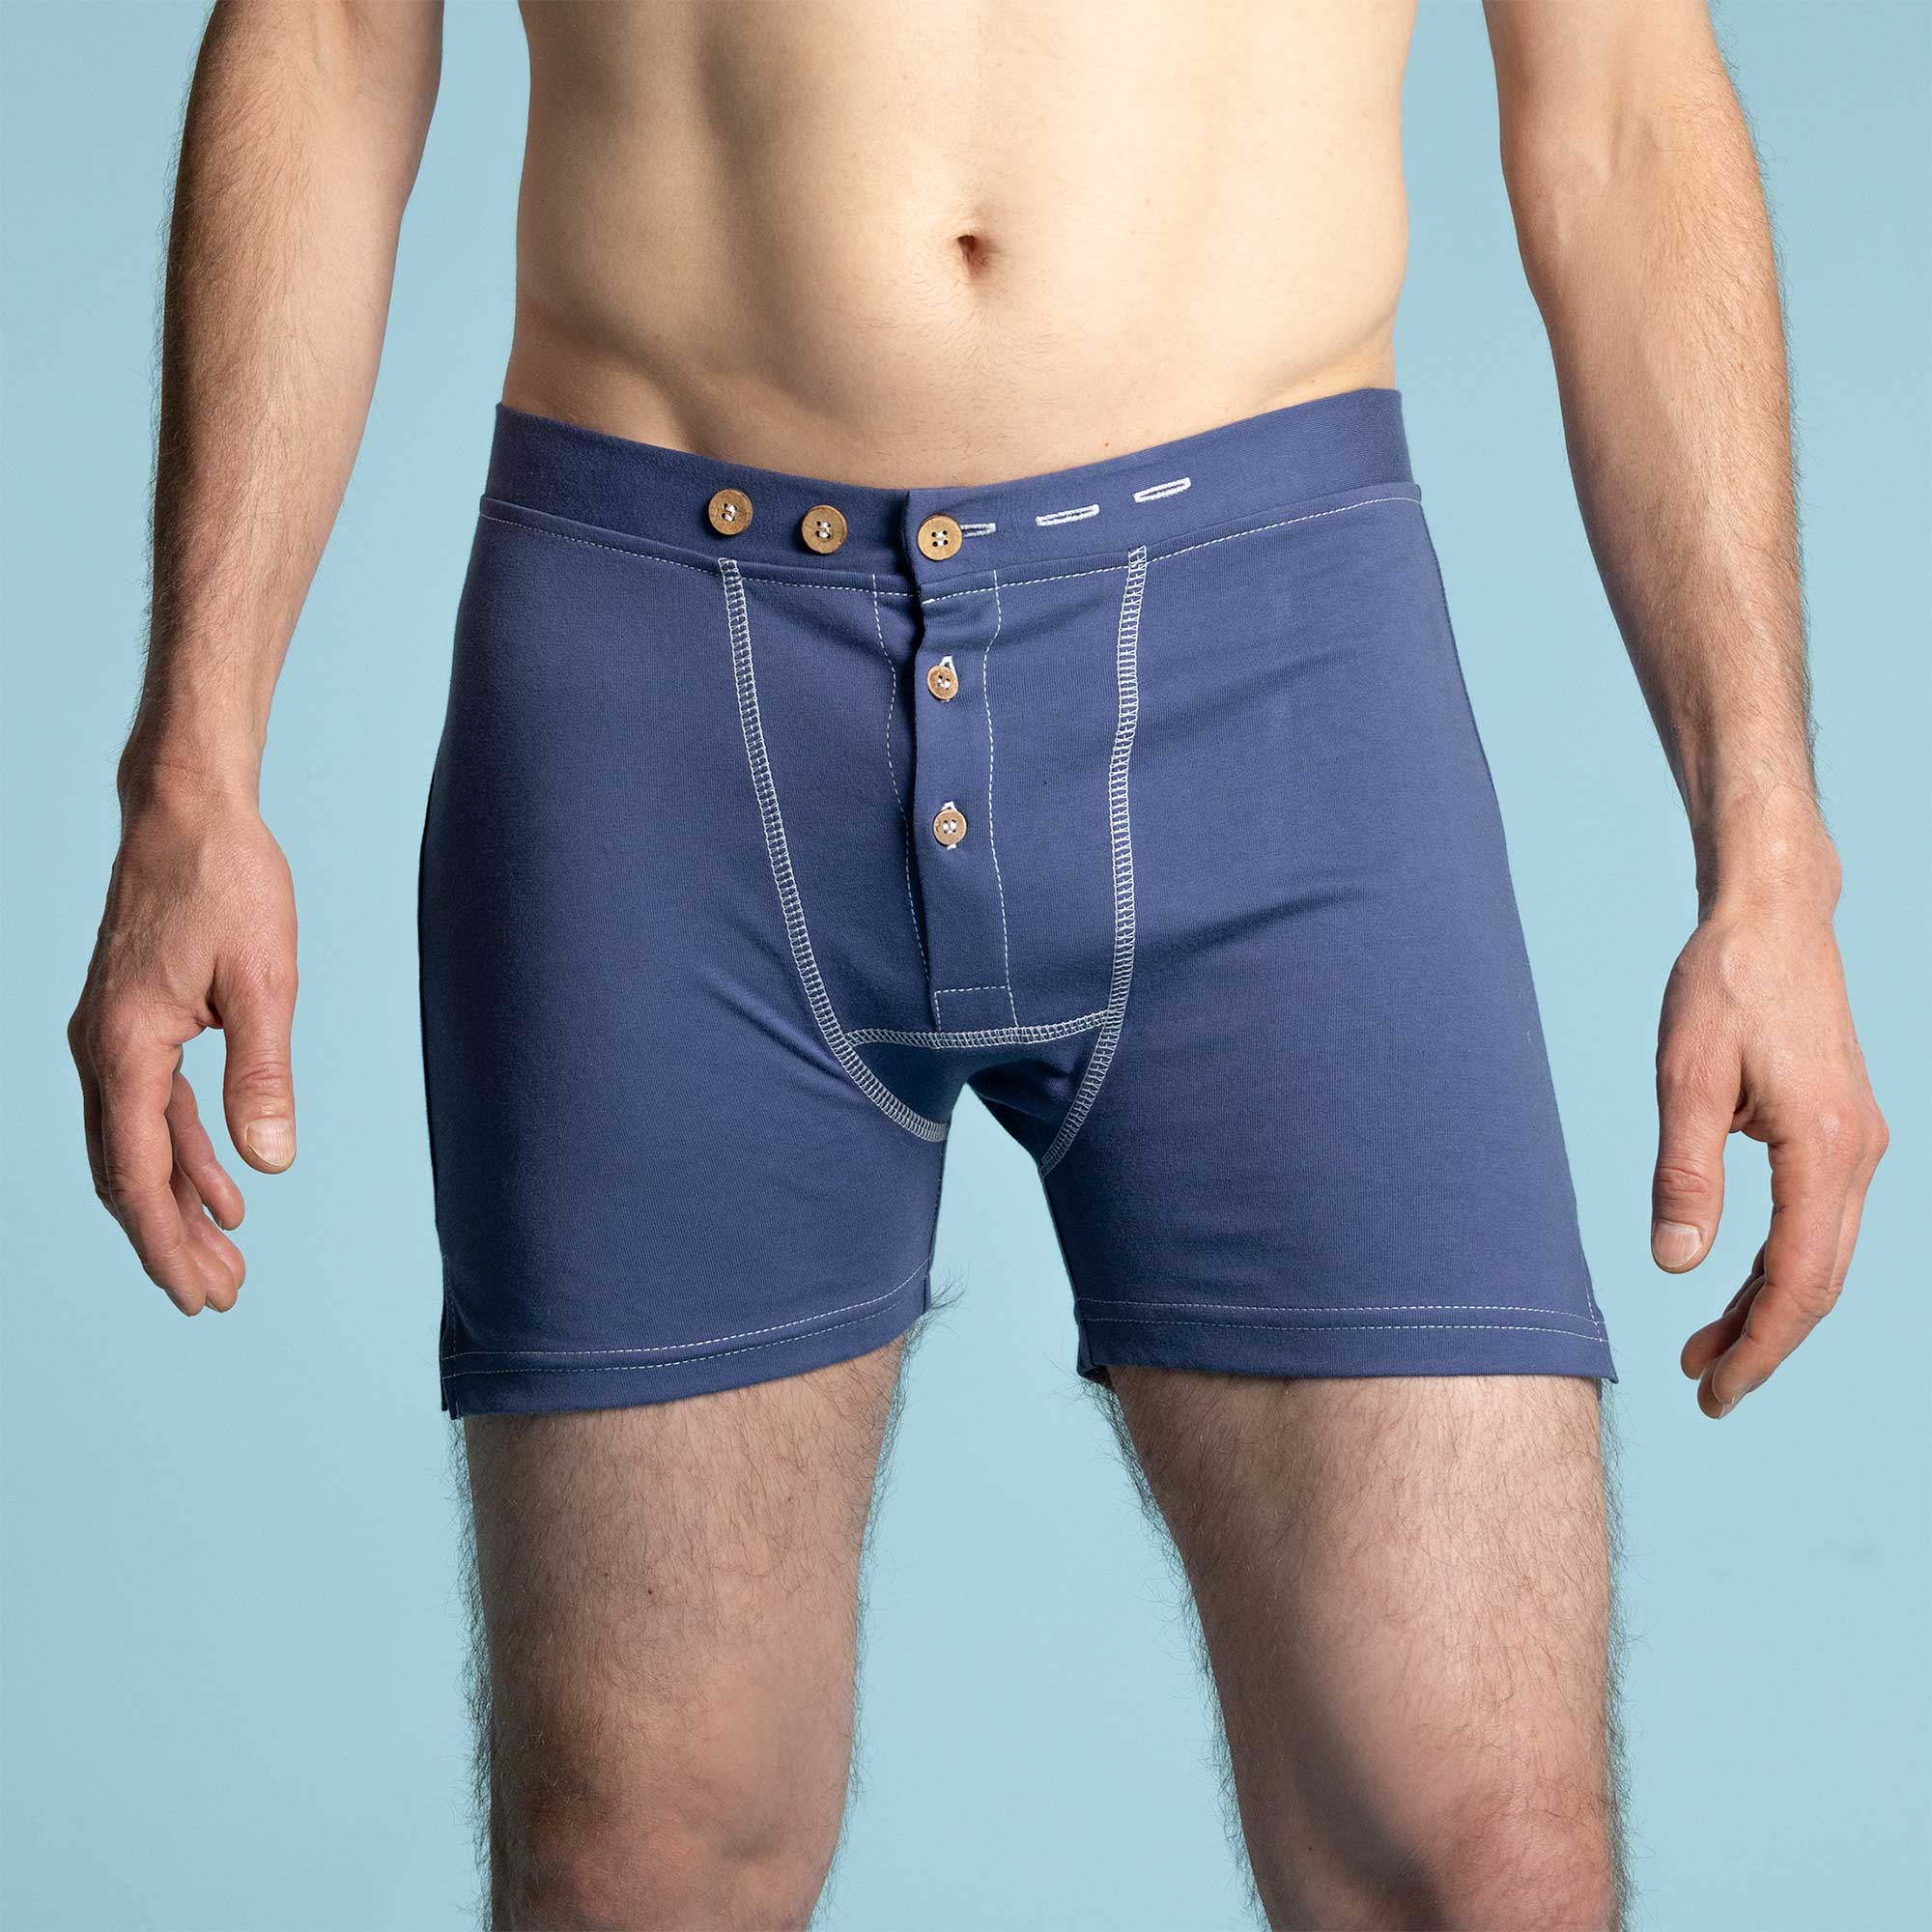 100% Merino Wool Mens Boxer Shorts Underwear 3 Pack Set Organic